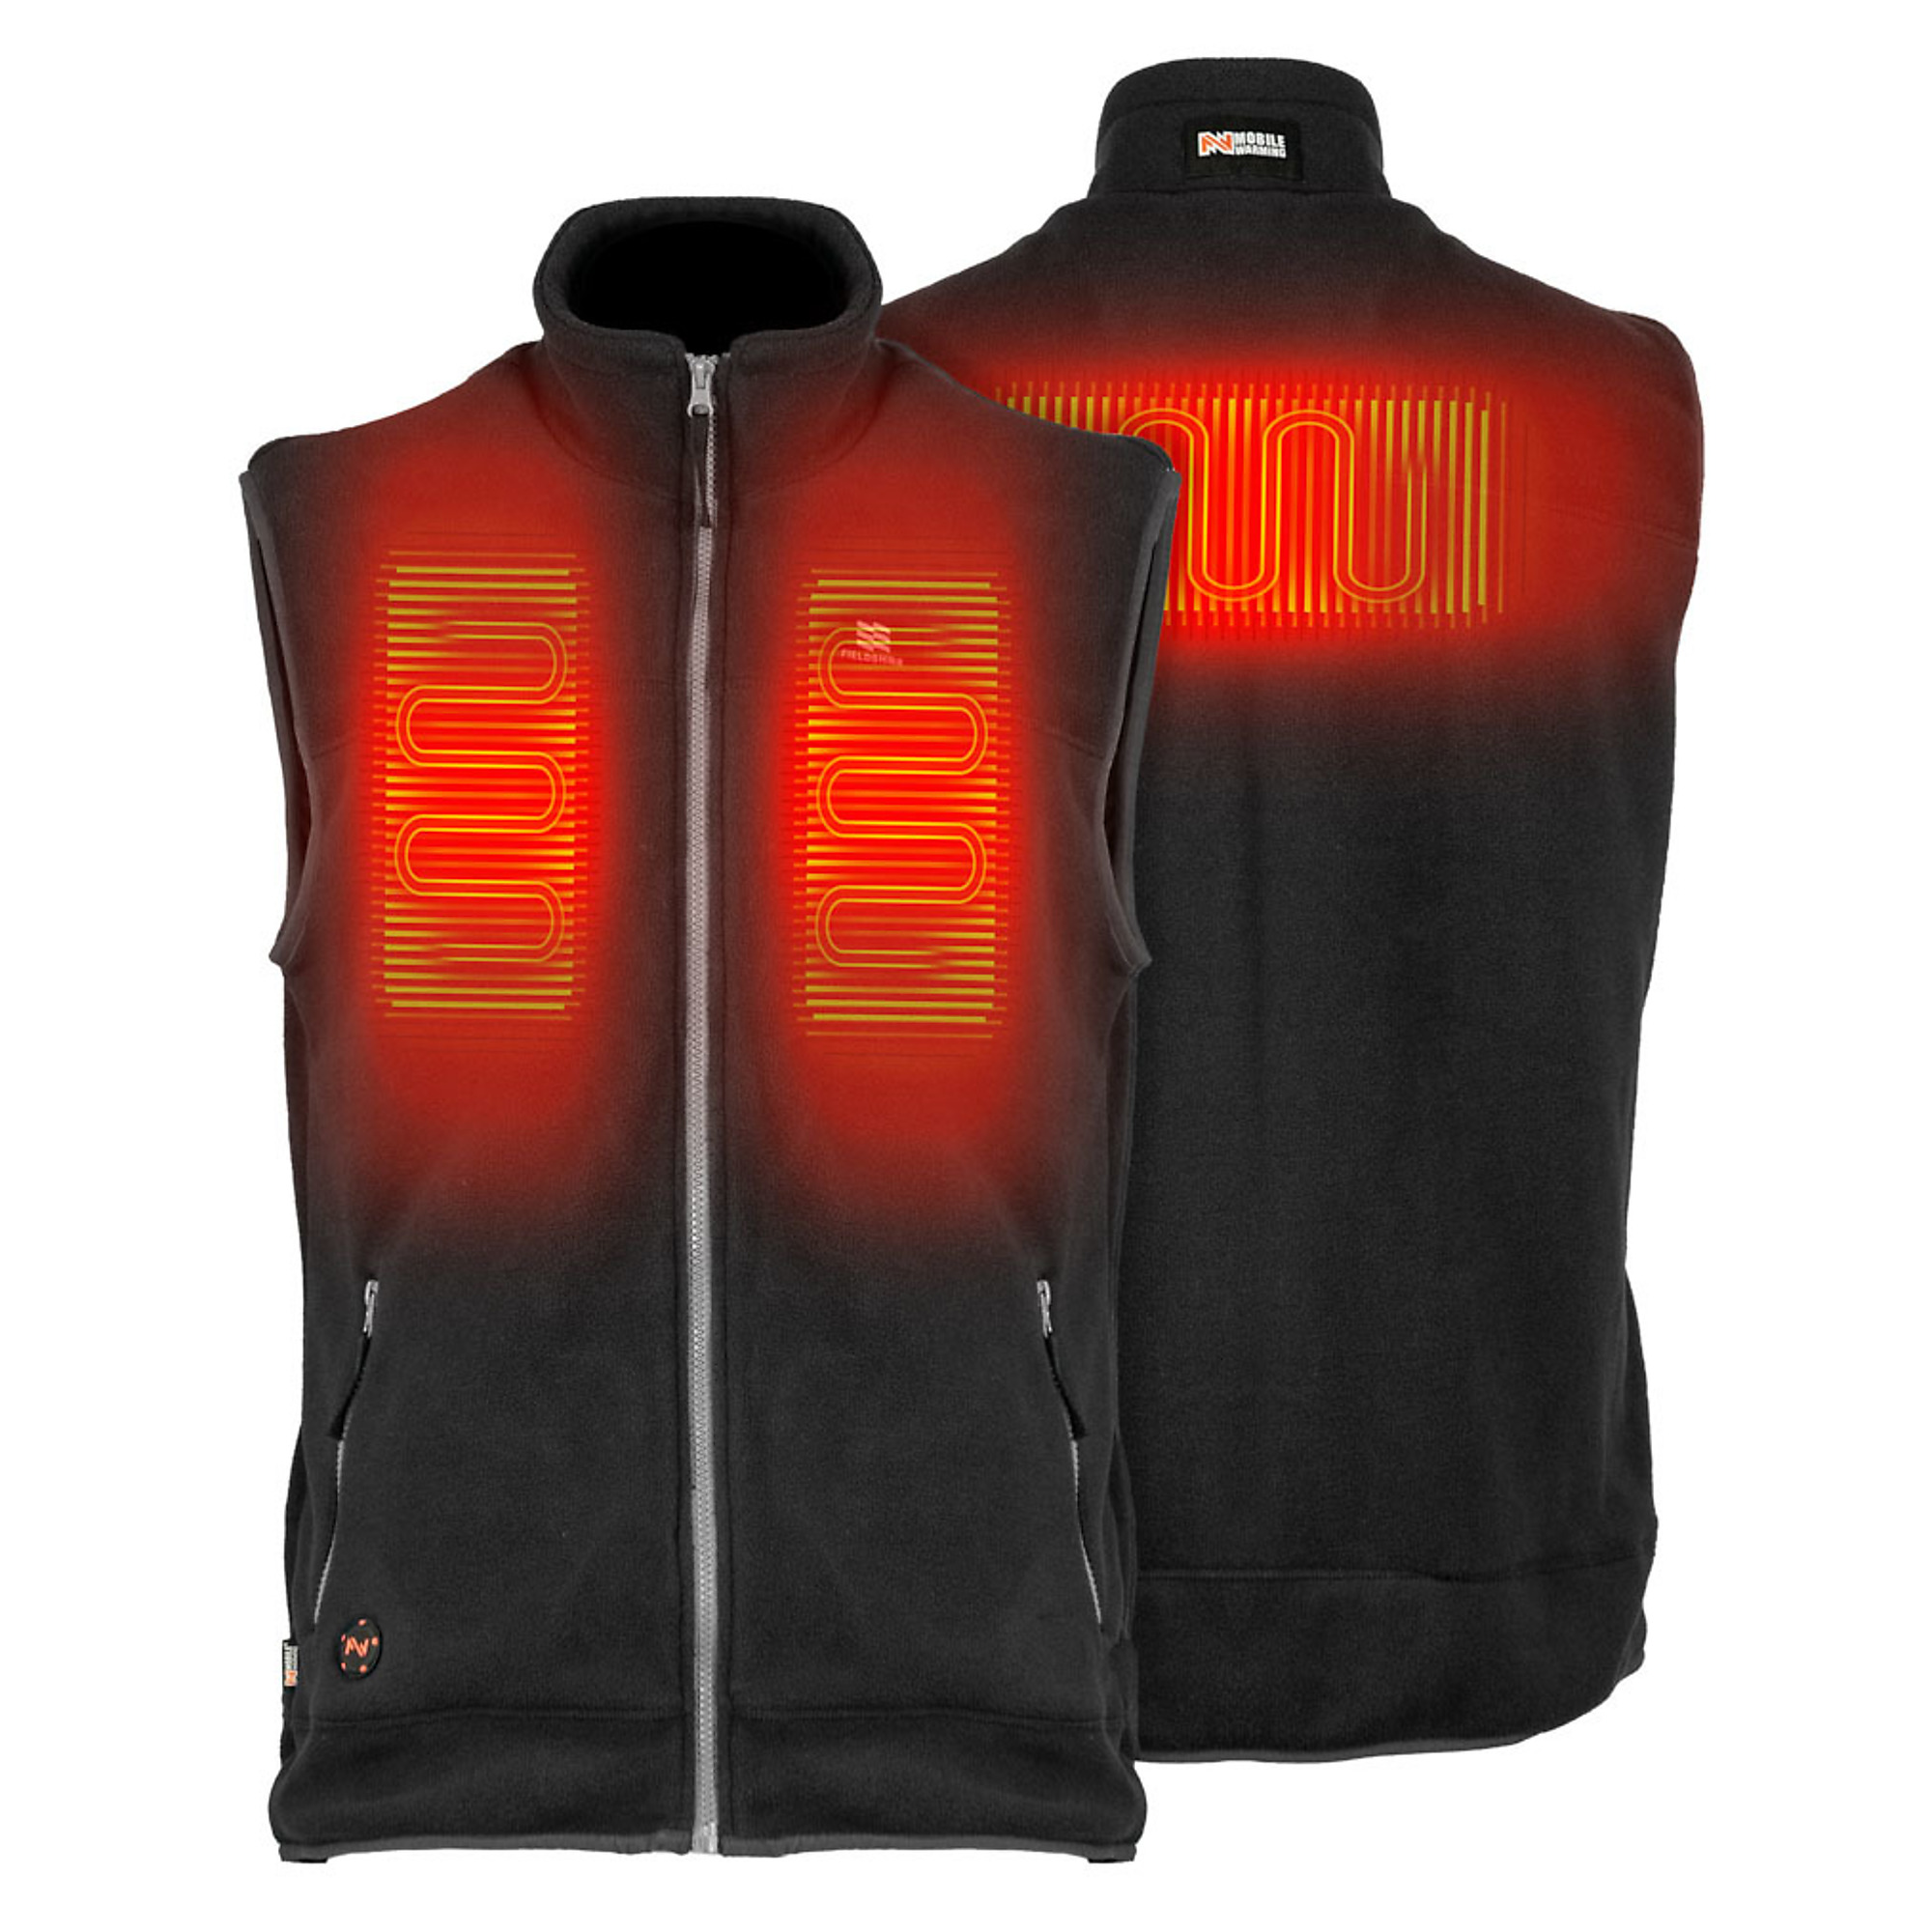 Fieldsheer, Men's Trek Heated Vest with 7.4v Battery, Size L, Color Black, Model MWMV17010422